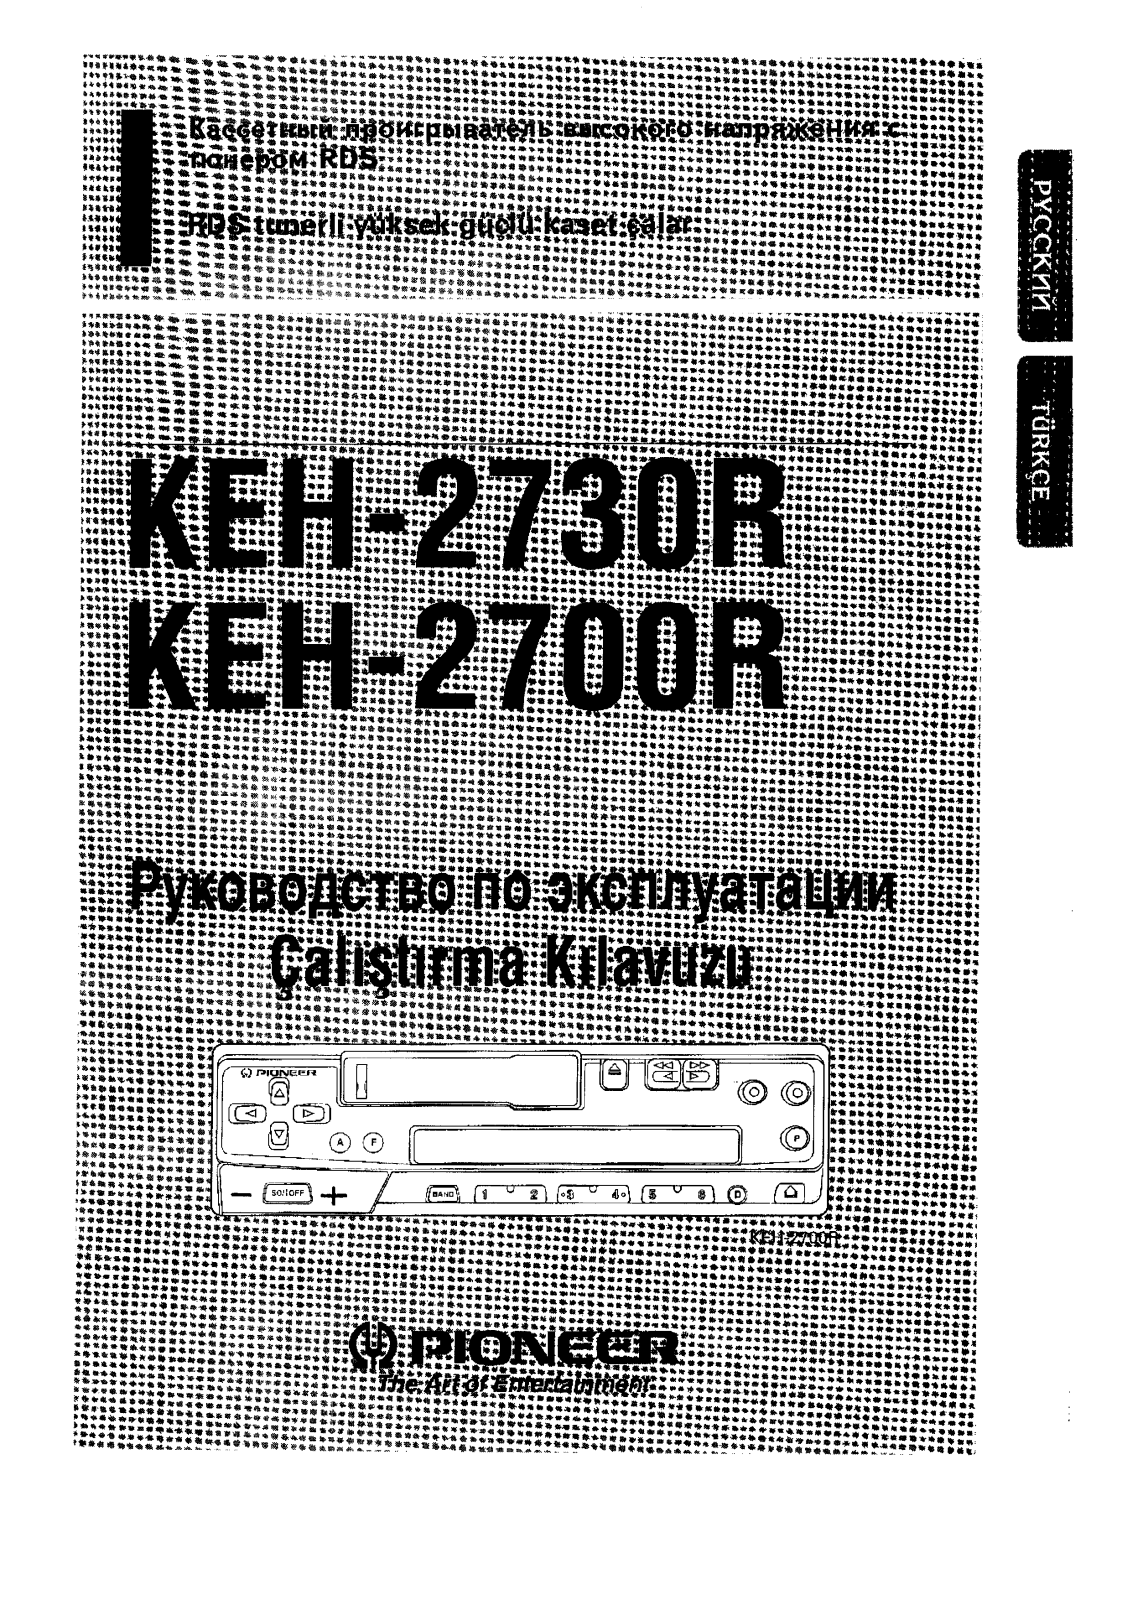 Pioneer Keh-2730, Keh-2700 Service Manual